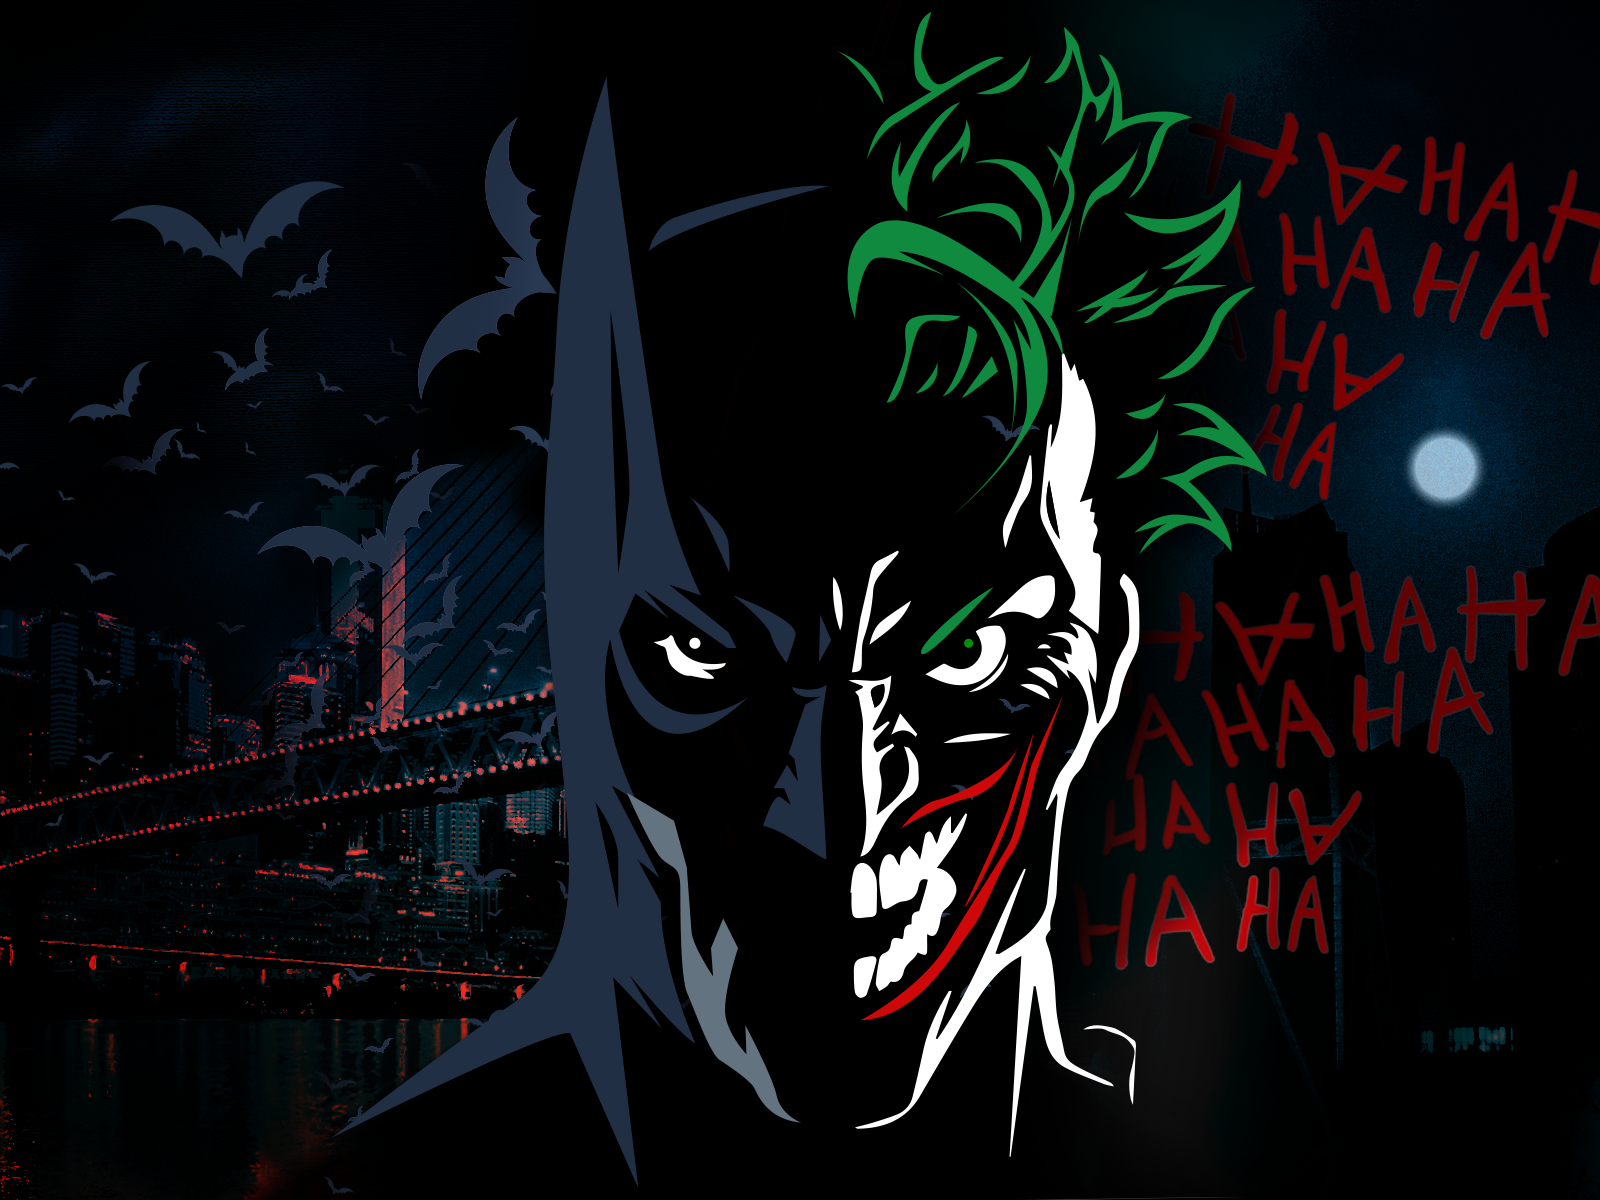 Batman v/s Joker by Yogesh Madharam on Dribbble